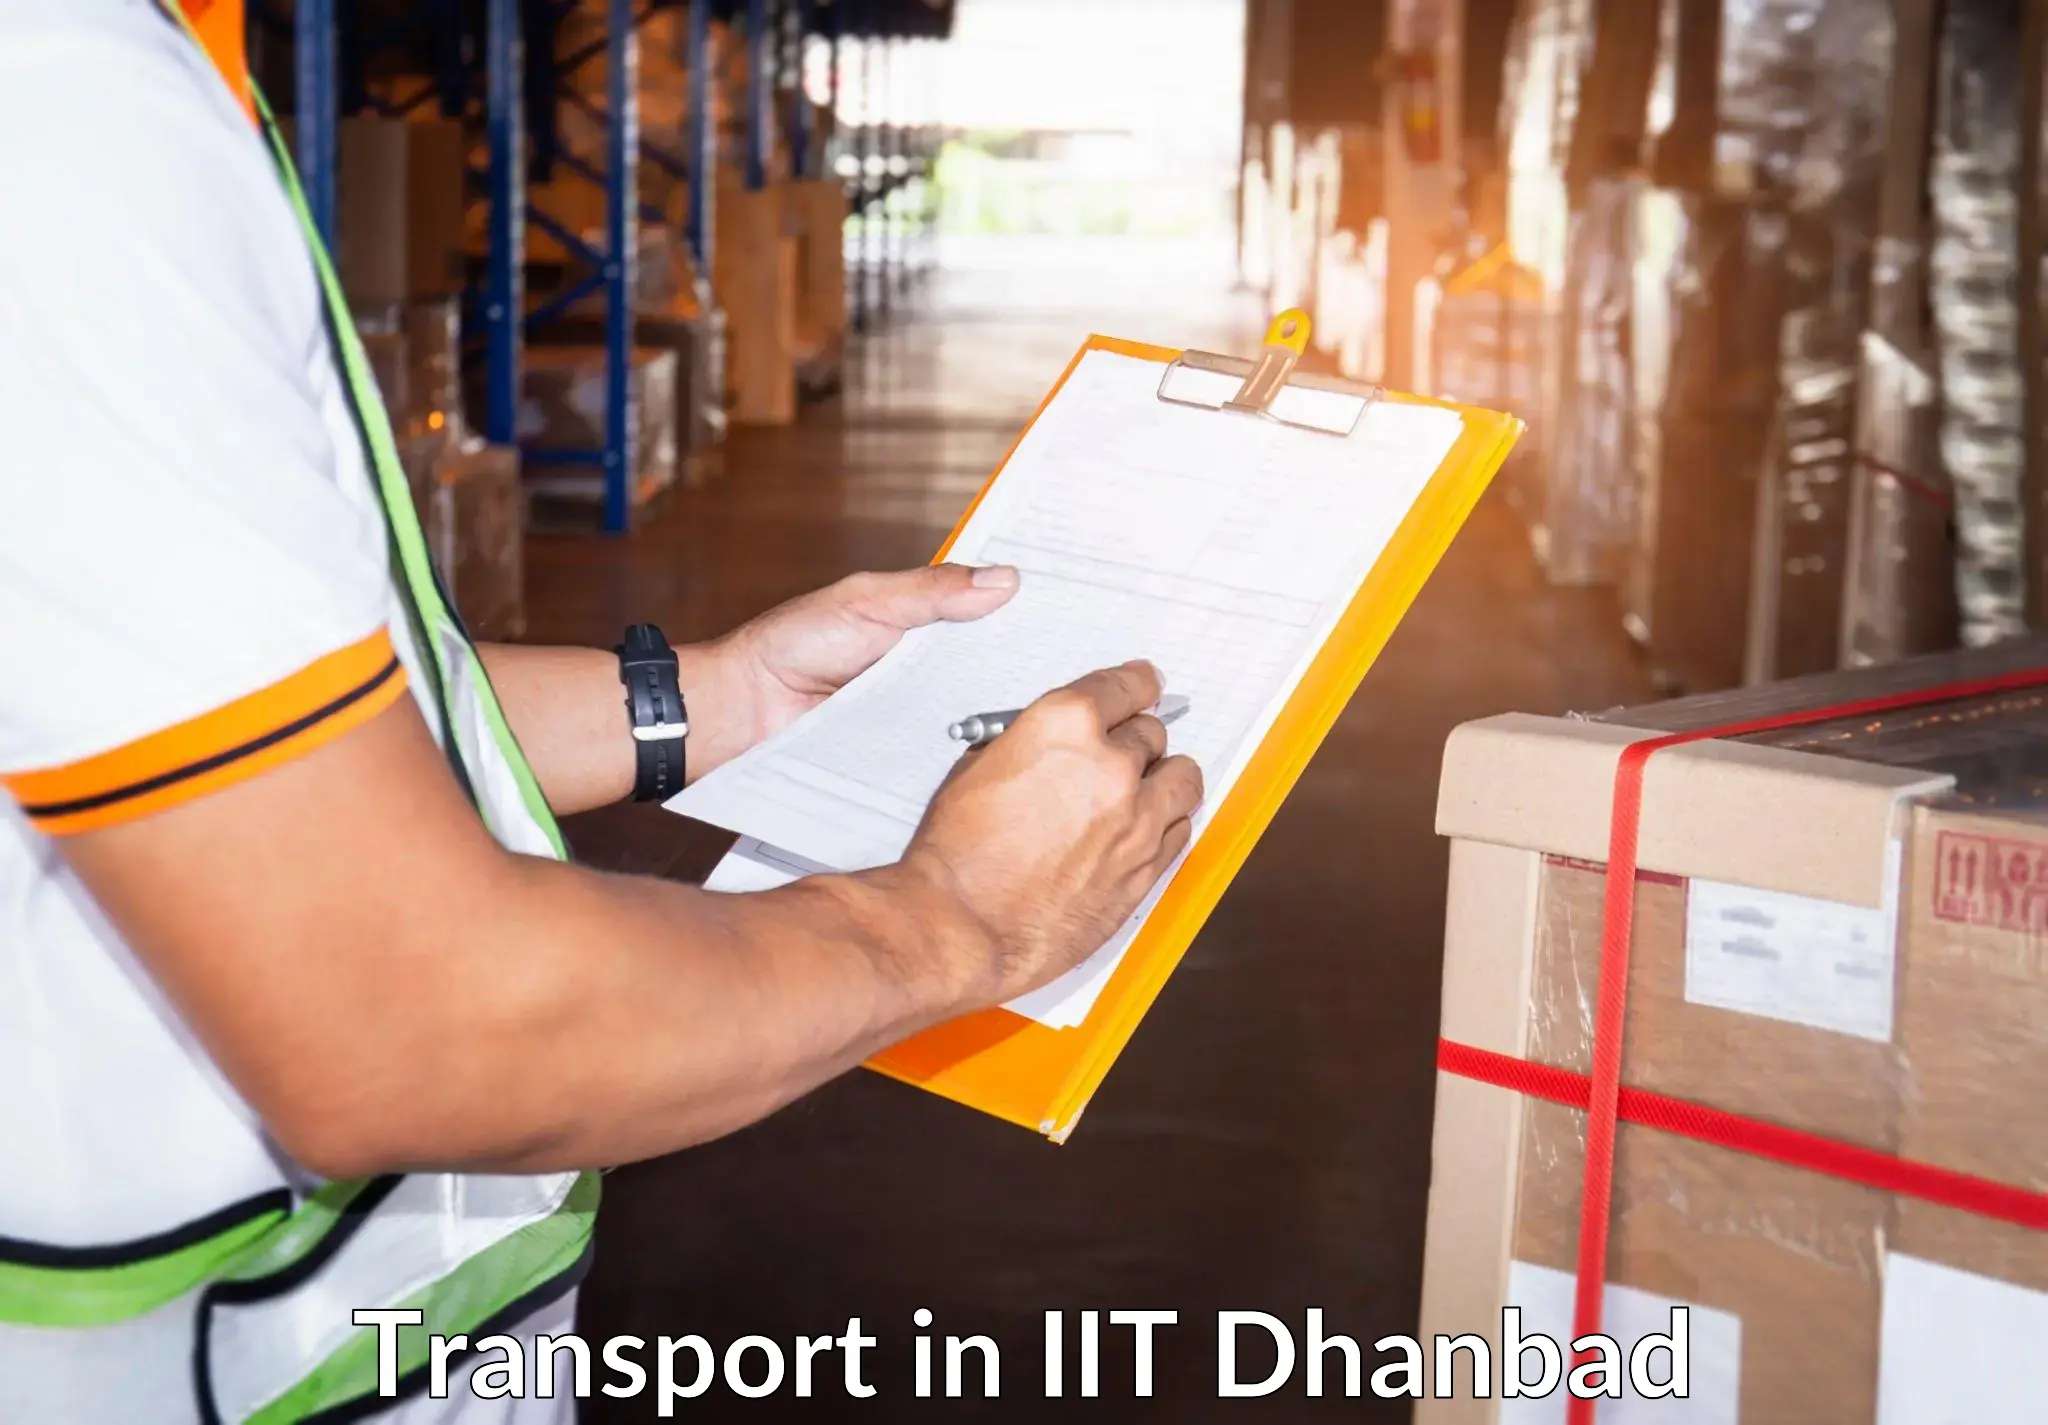 Bike shipping service in IIT Dhanbad